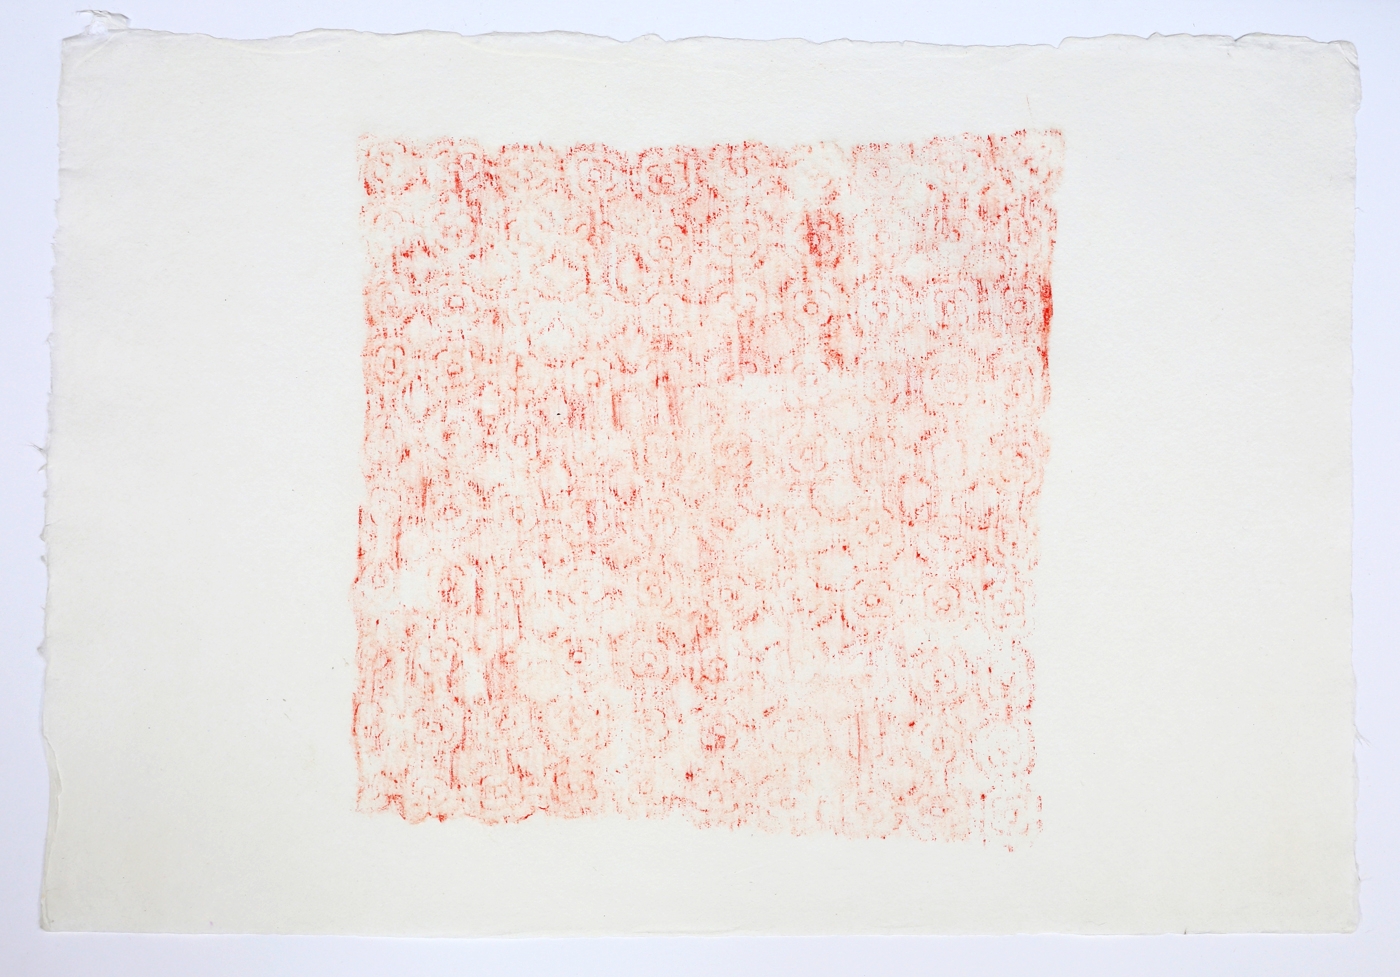  Handkerchief. 2015. Crayon on Paper. 11" x 17" 